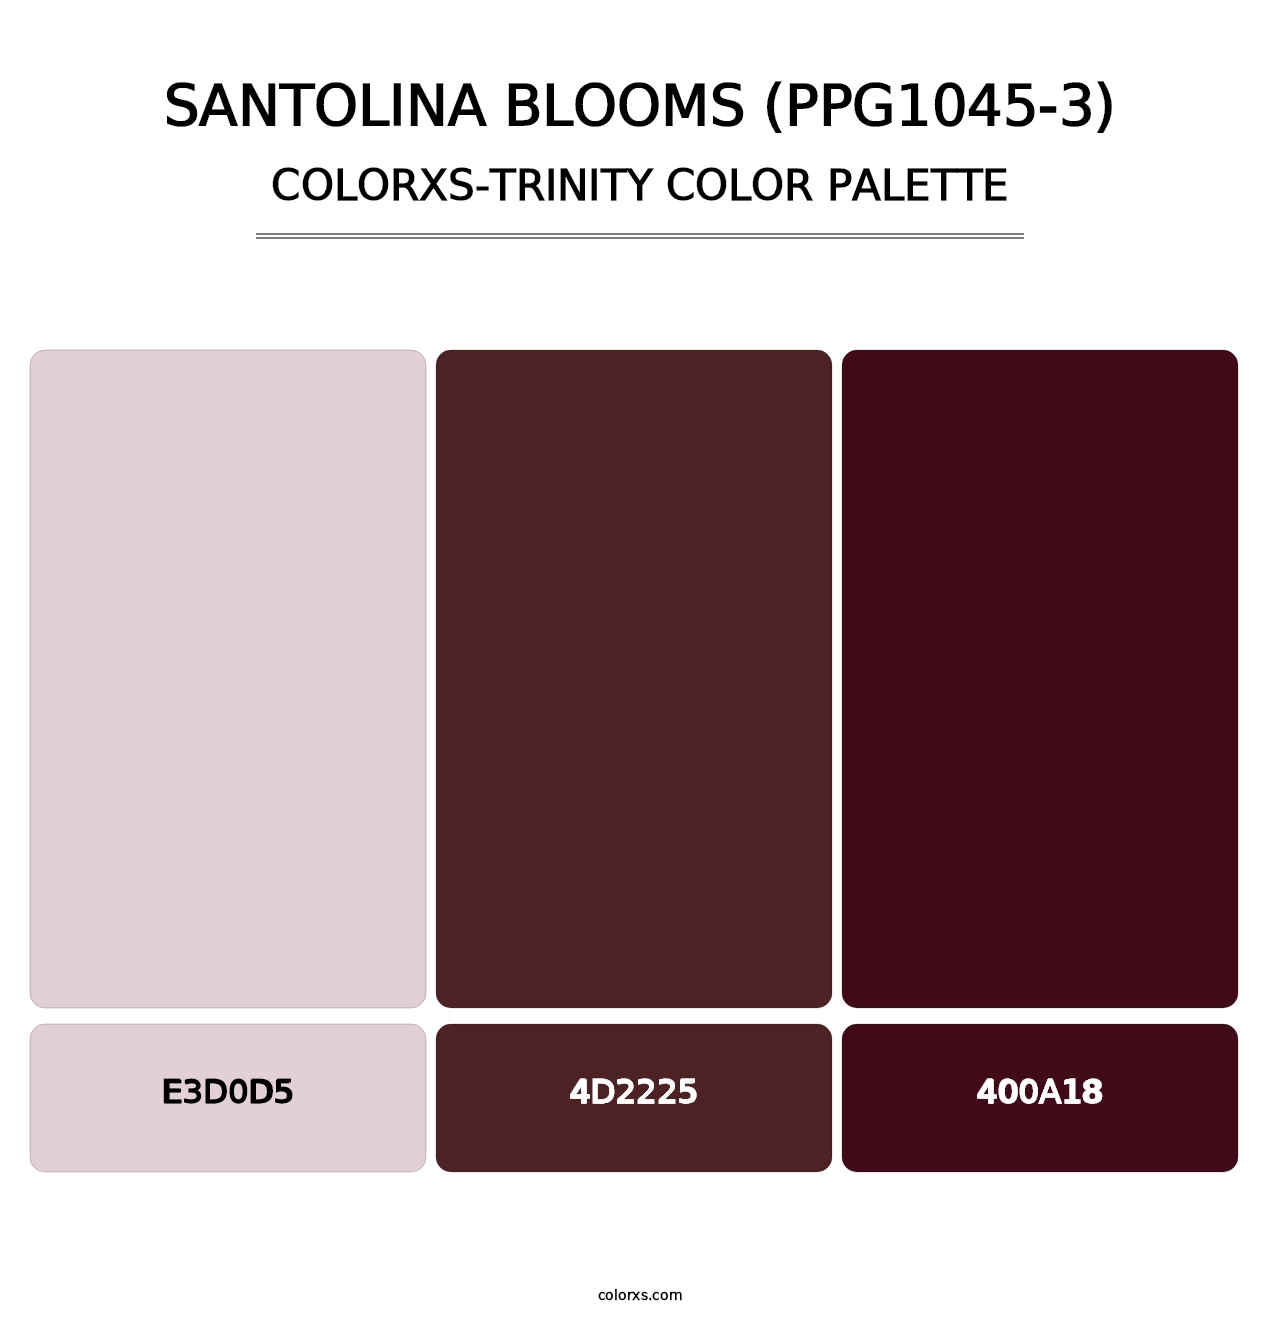 Santolina Blooms (PPG1045-3) - Colorxs Trinity Palette